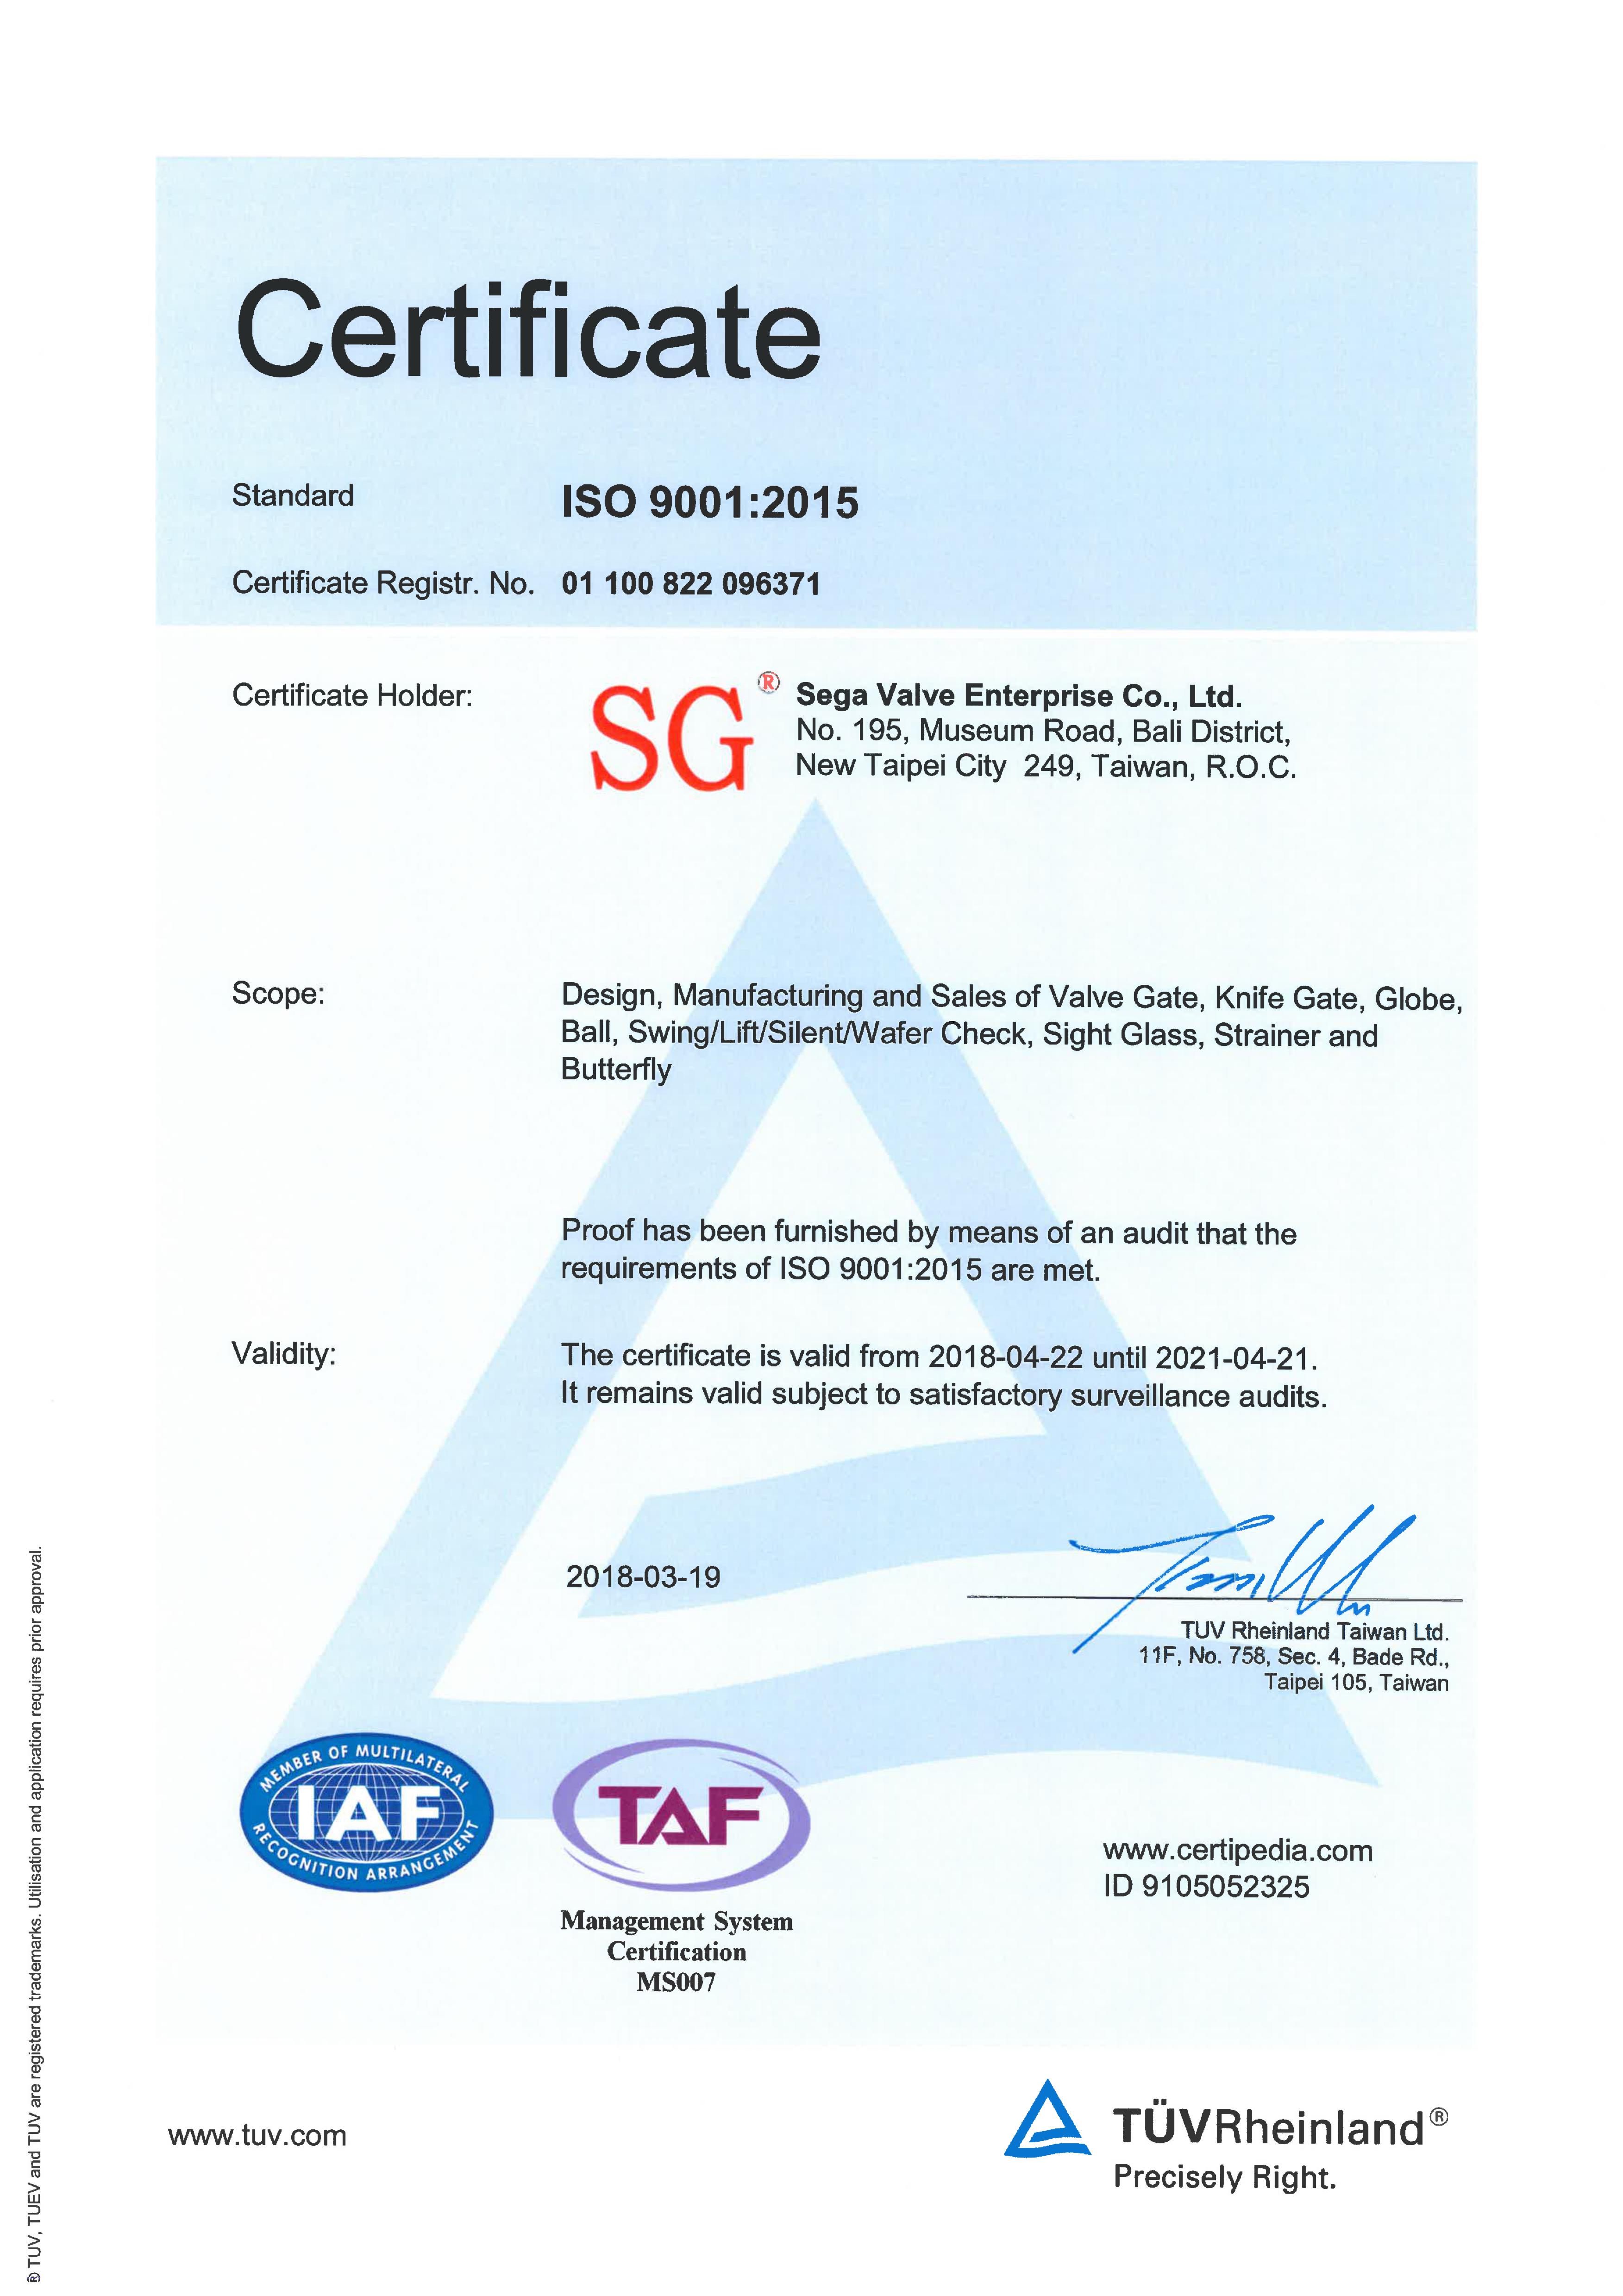 S.G.VALVE's certificate